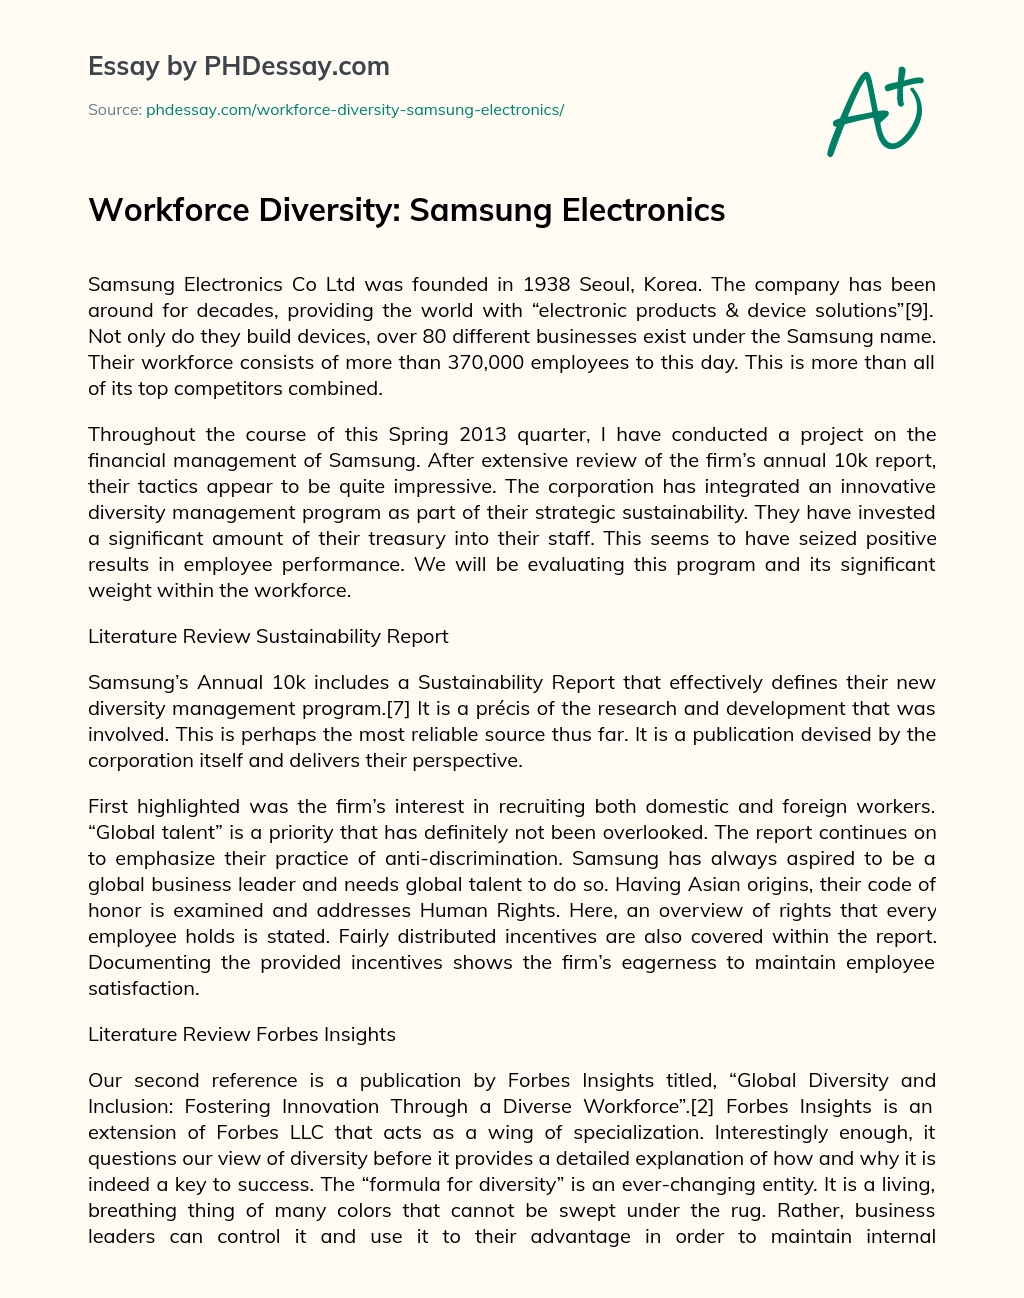 Workforce Diversity: Samsung Electronics essay